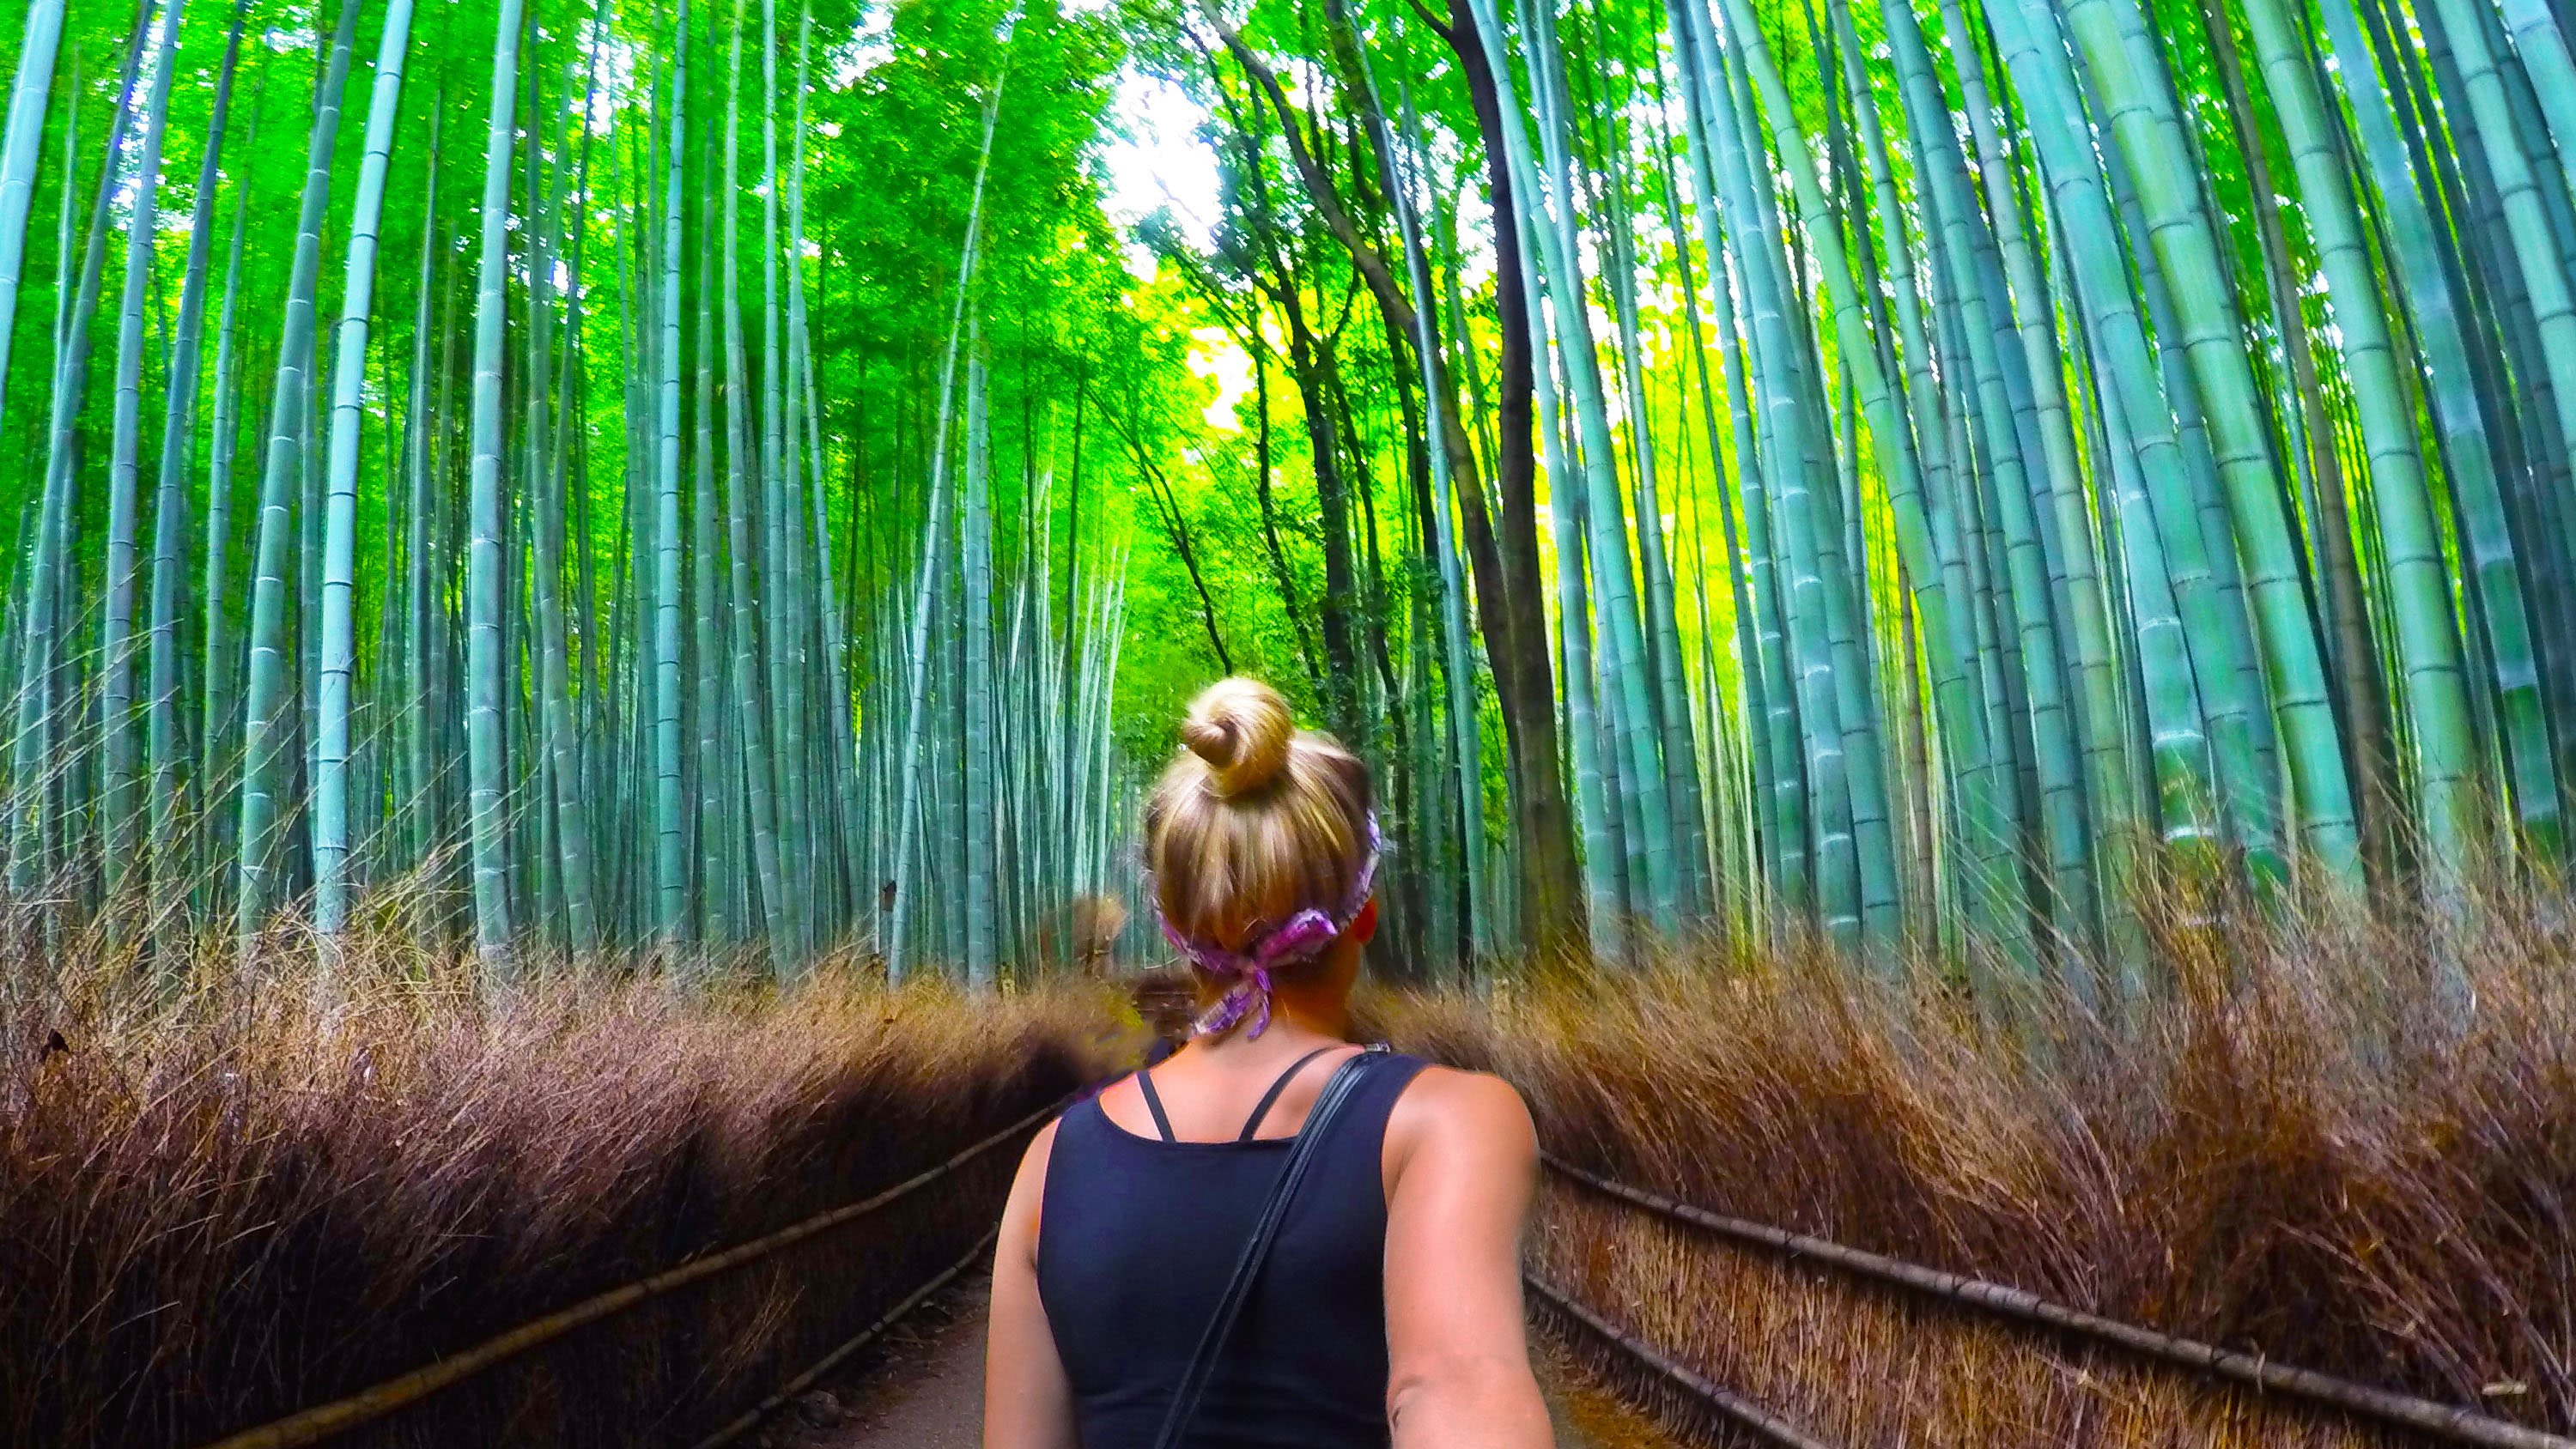 BAMBOO FOREST + SCARY MONKEYS (Kyoto Japan) - YouTube